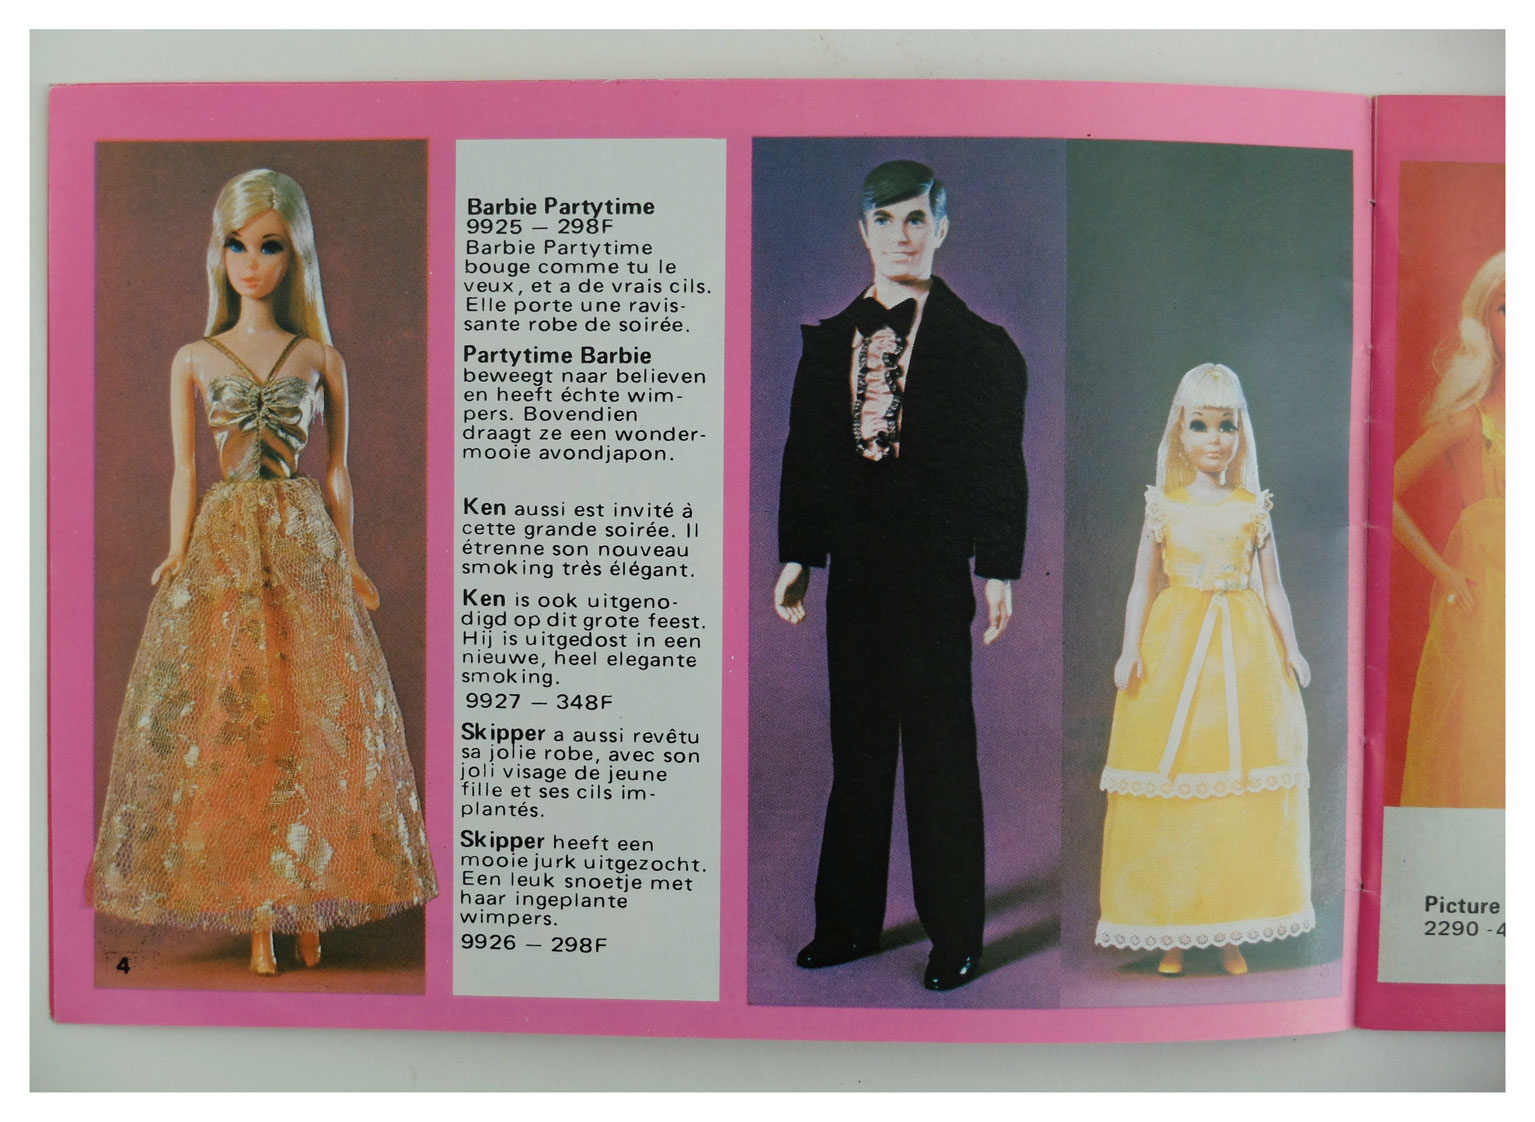 From 1978 Belgian Barbie booklet